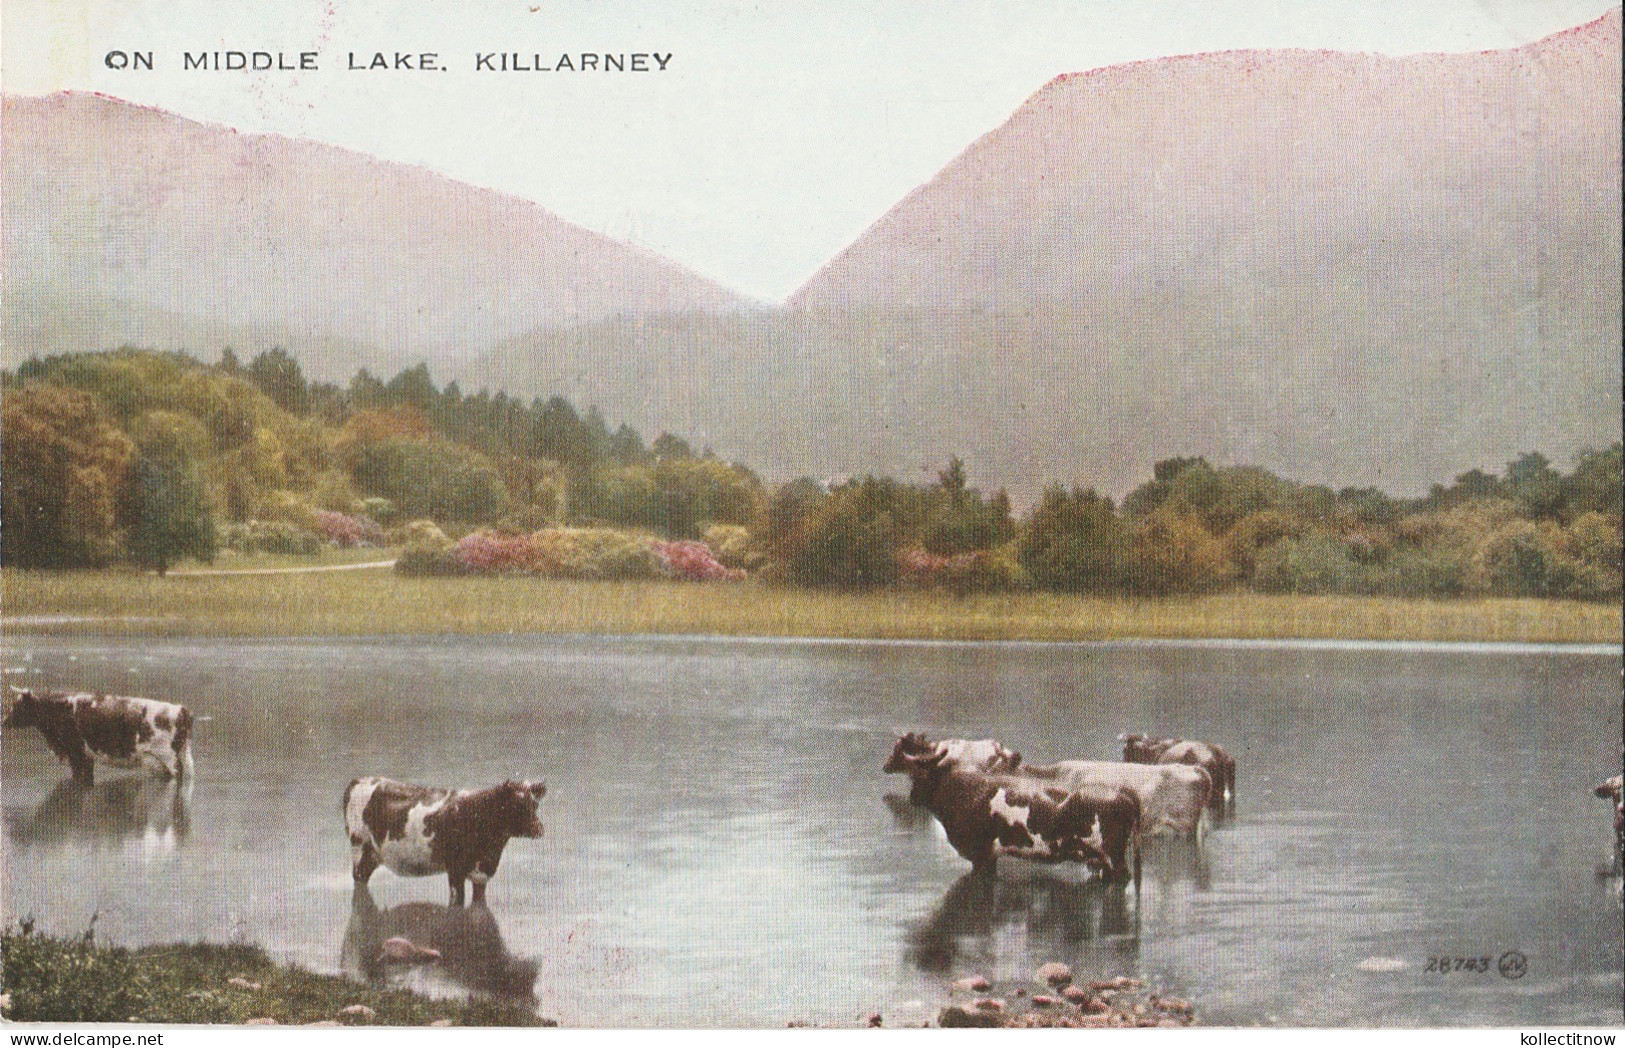 ON MIDDLE LAKE - KILLARNEY - Kilkenny